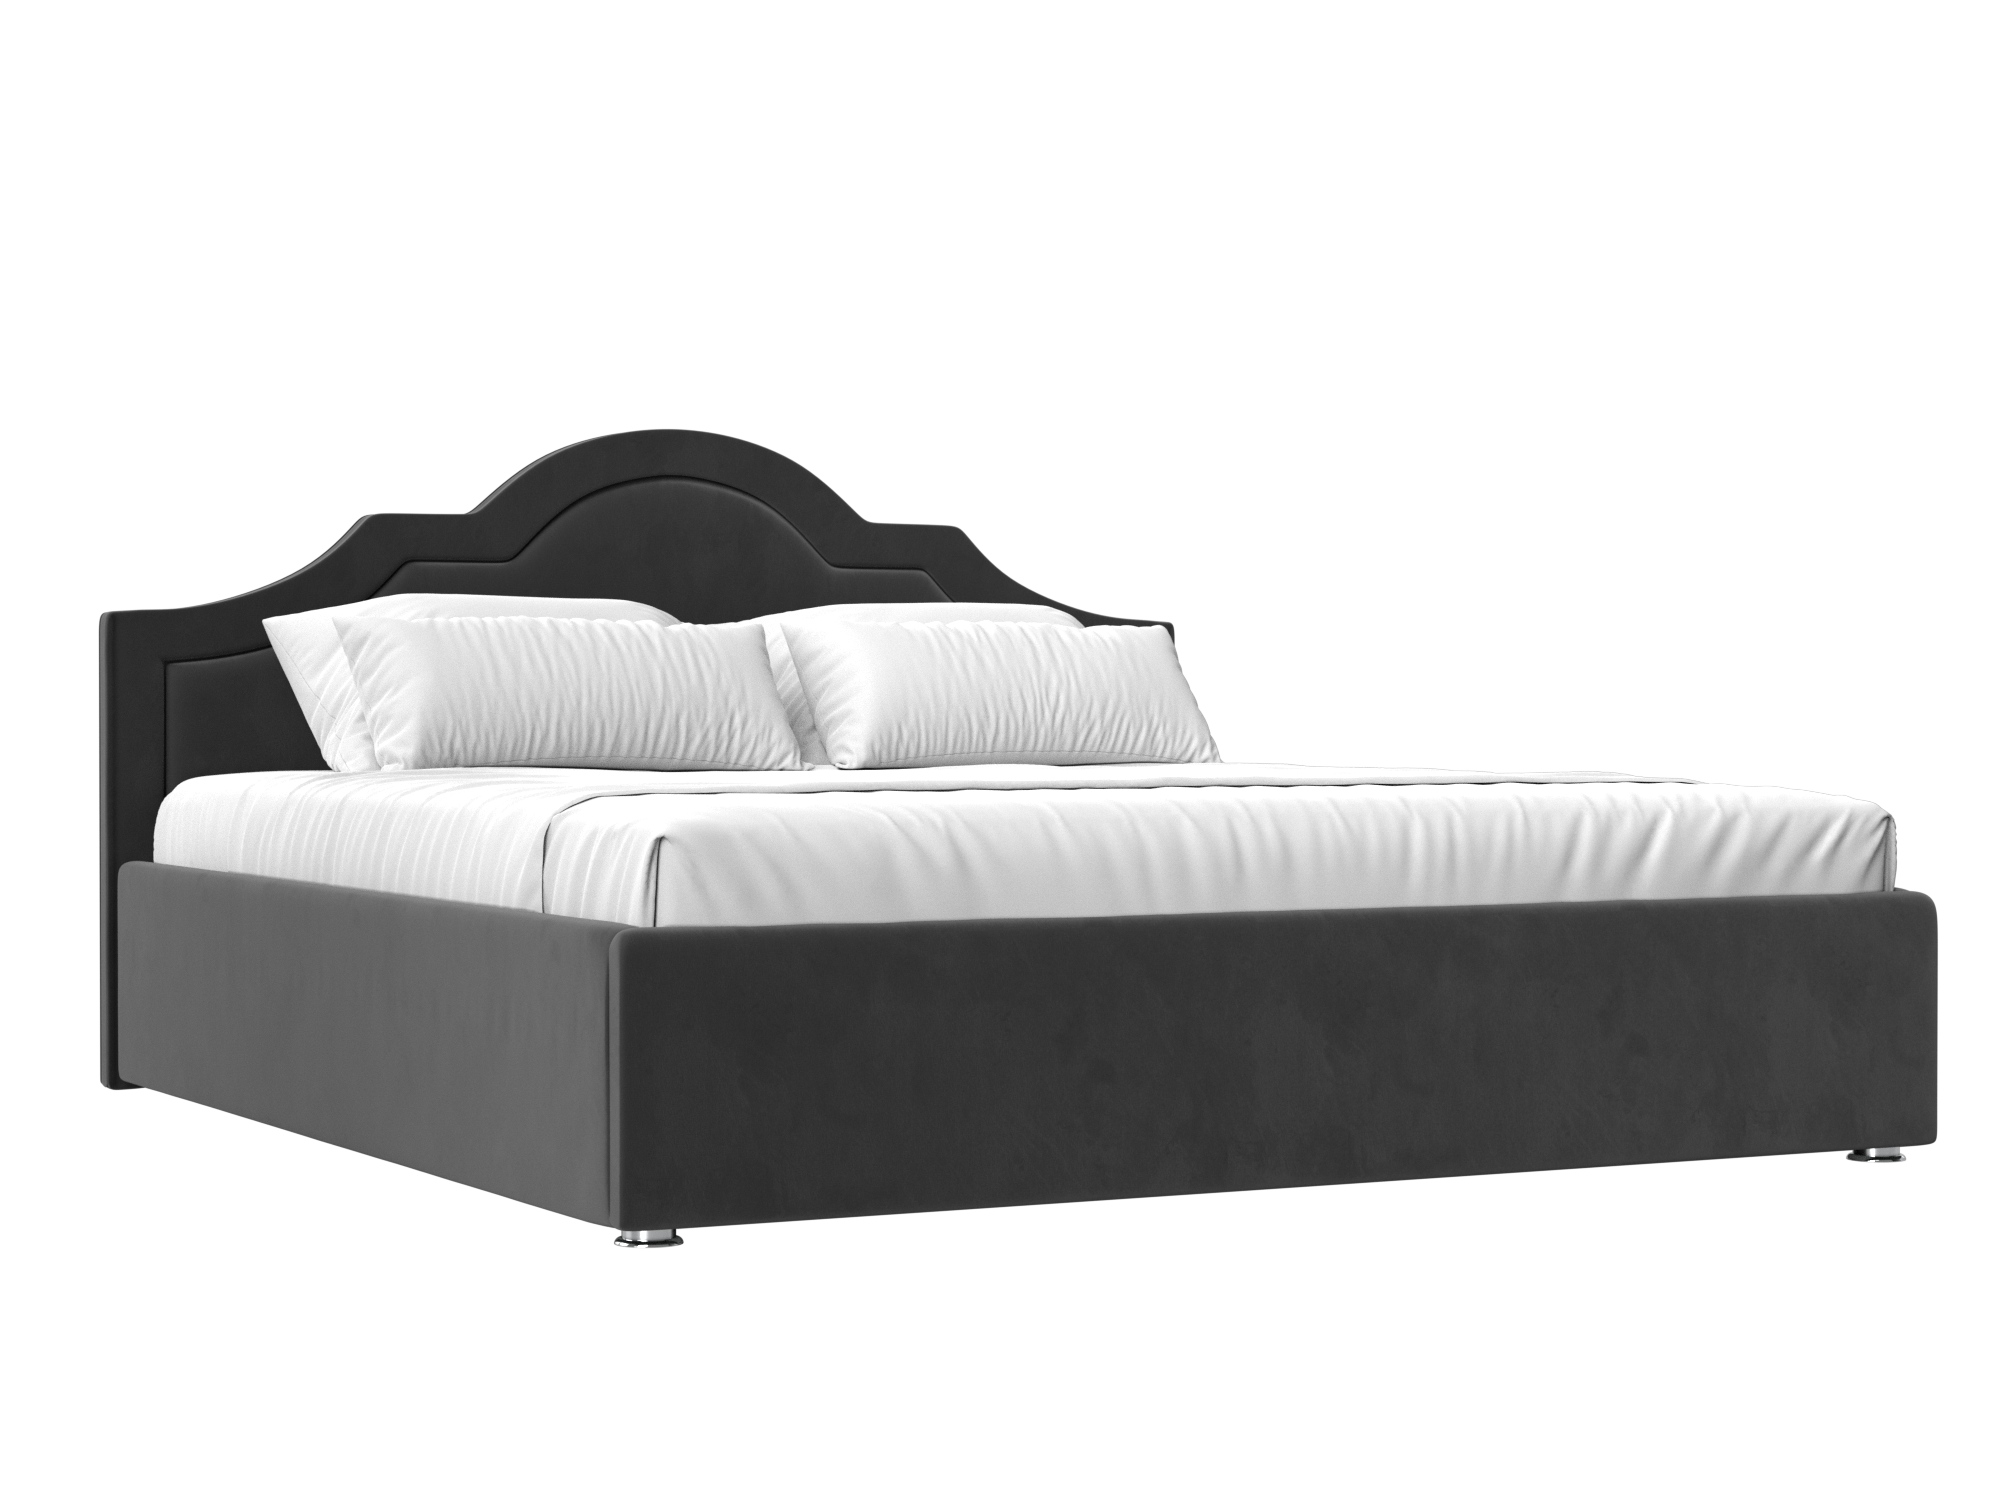 Кровать Афина (160х200) Серый, ЛДСП интерьерная кровать афина 200 велюр